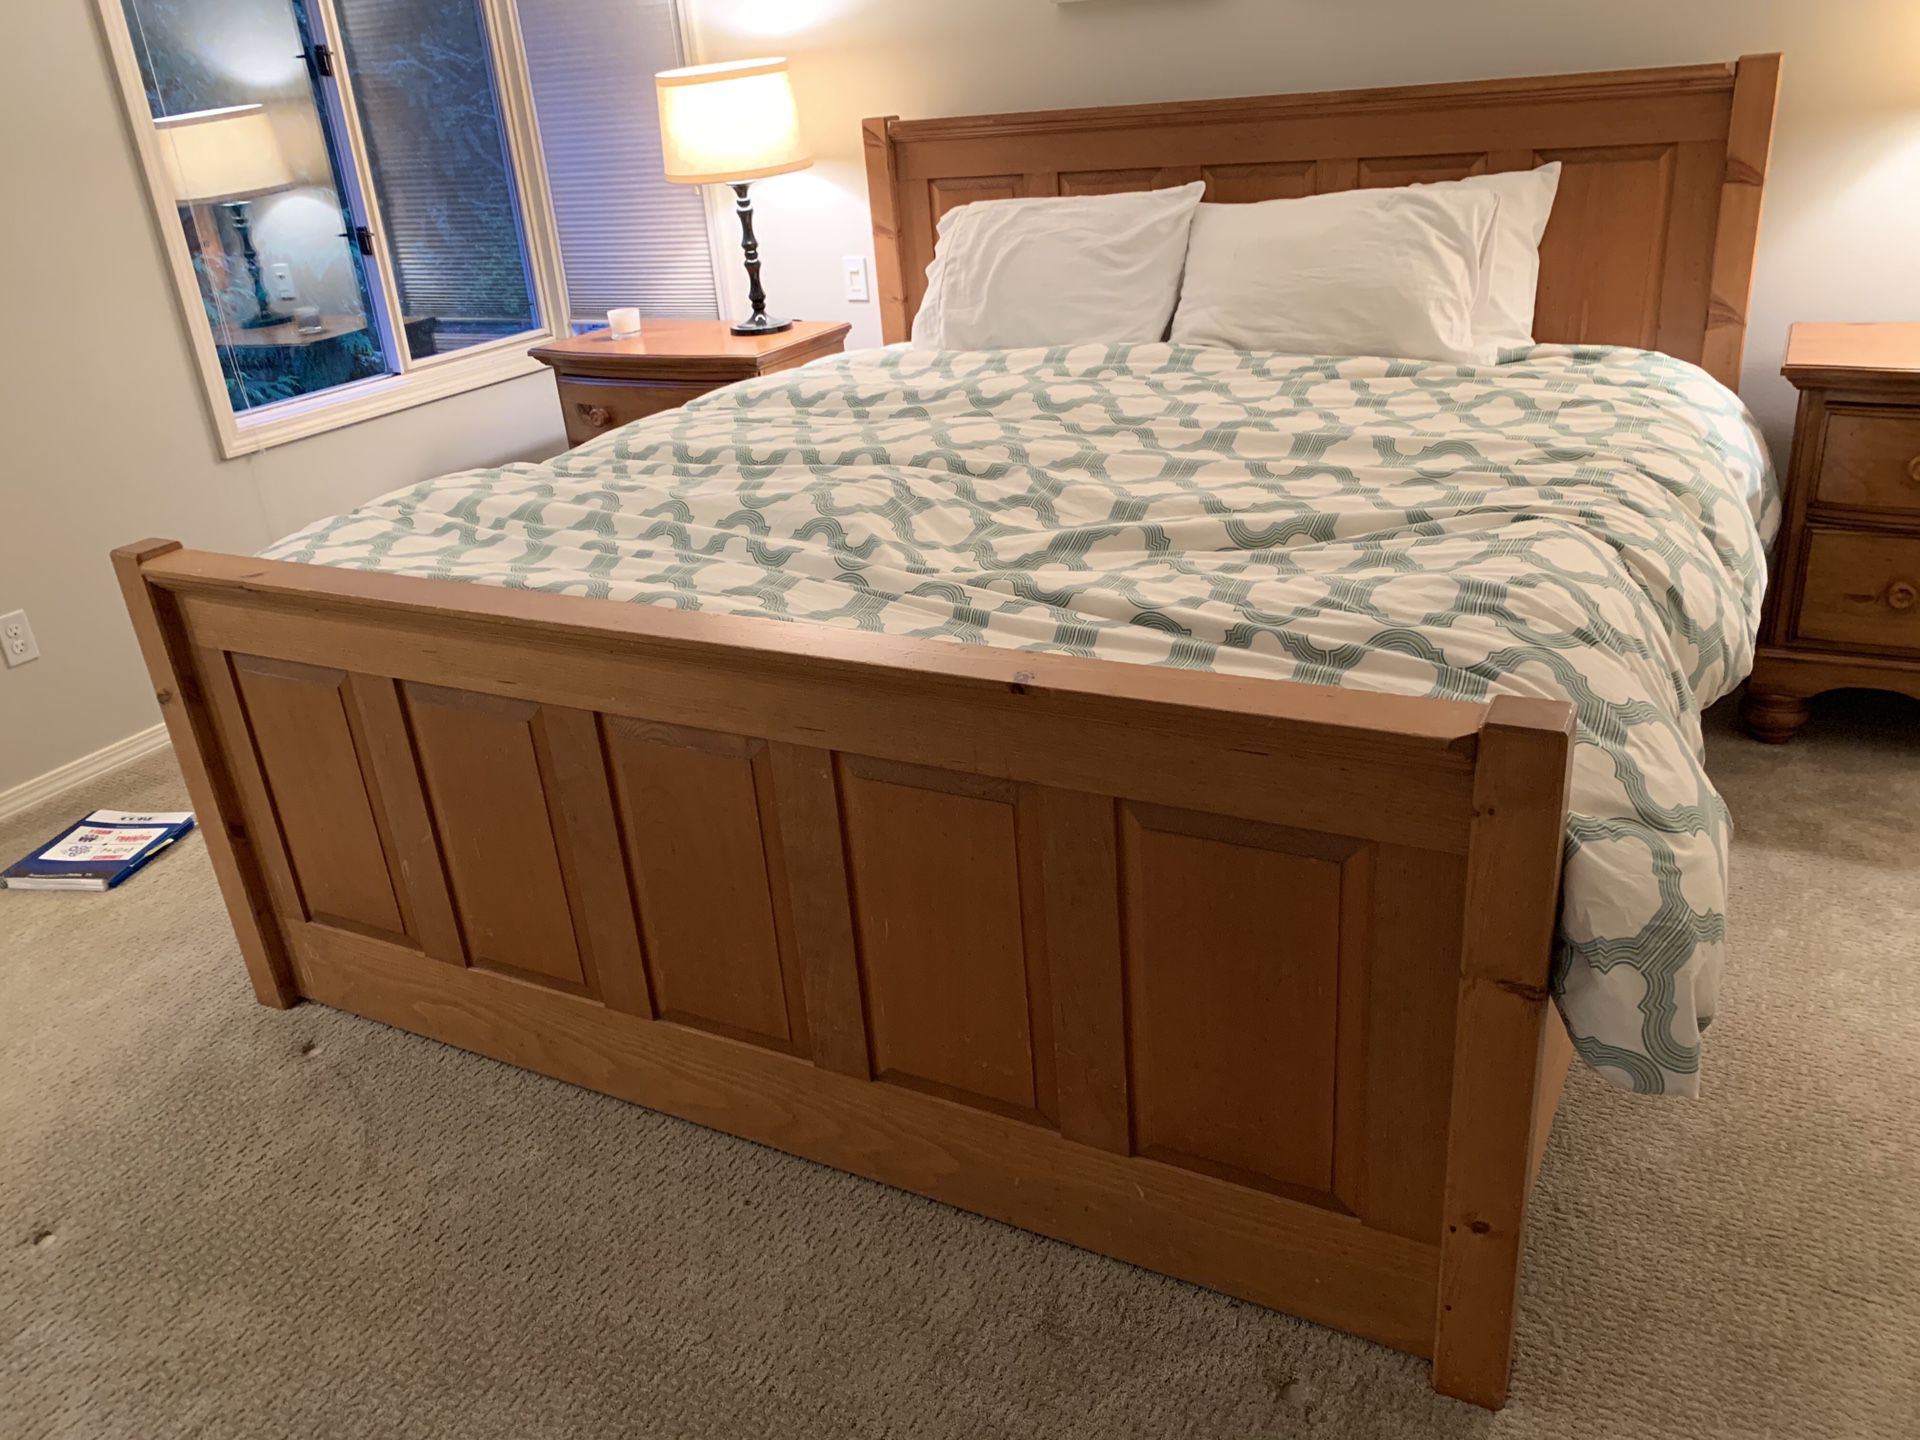 King bed & mattress set